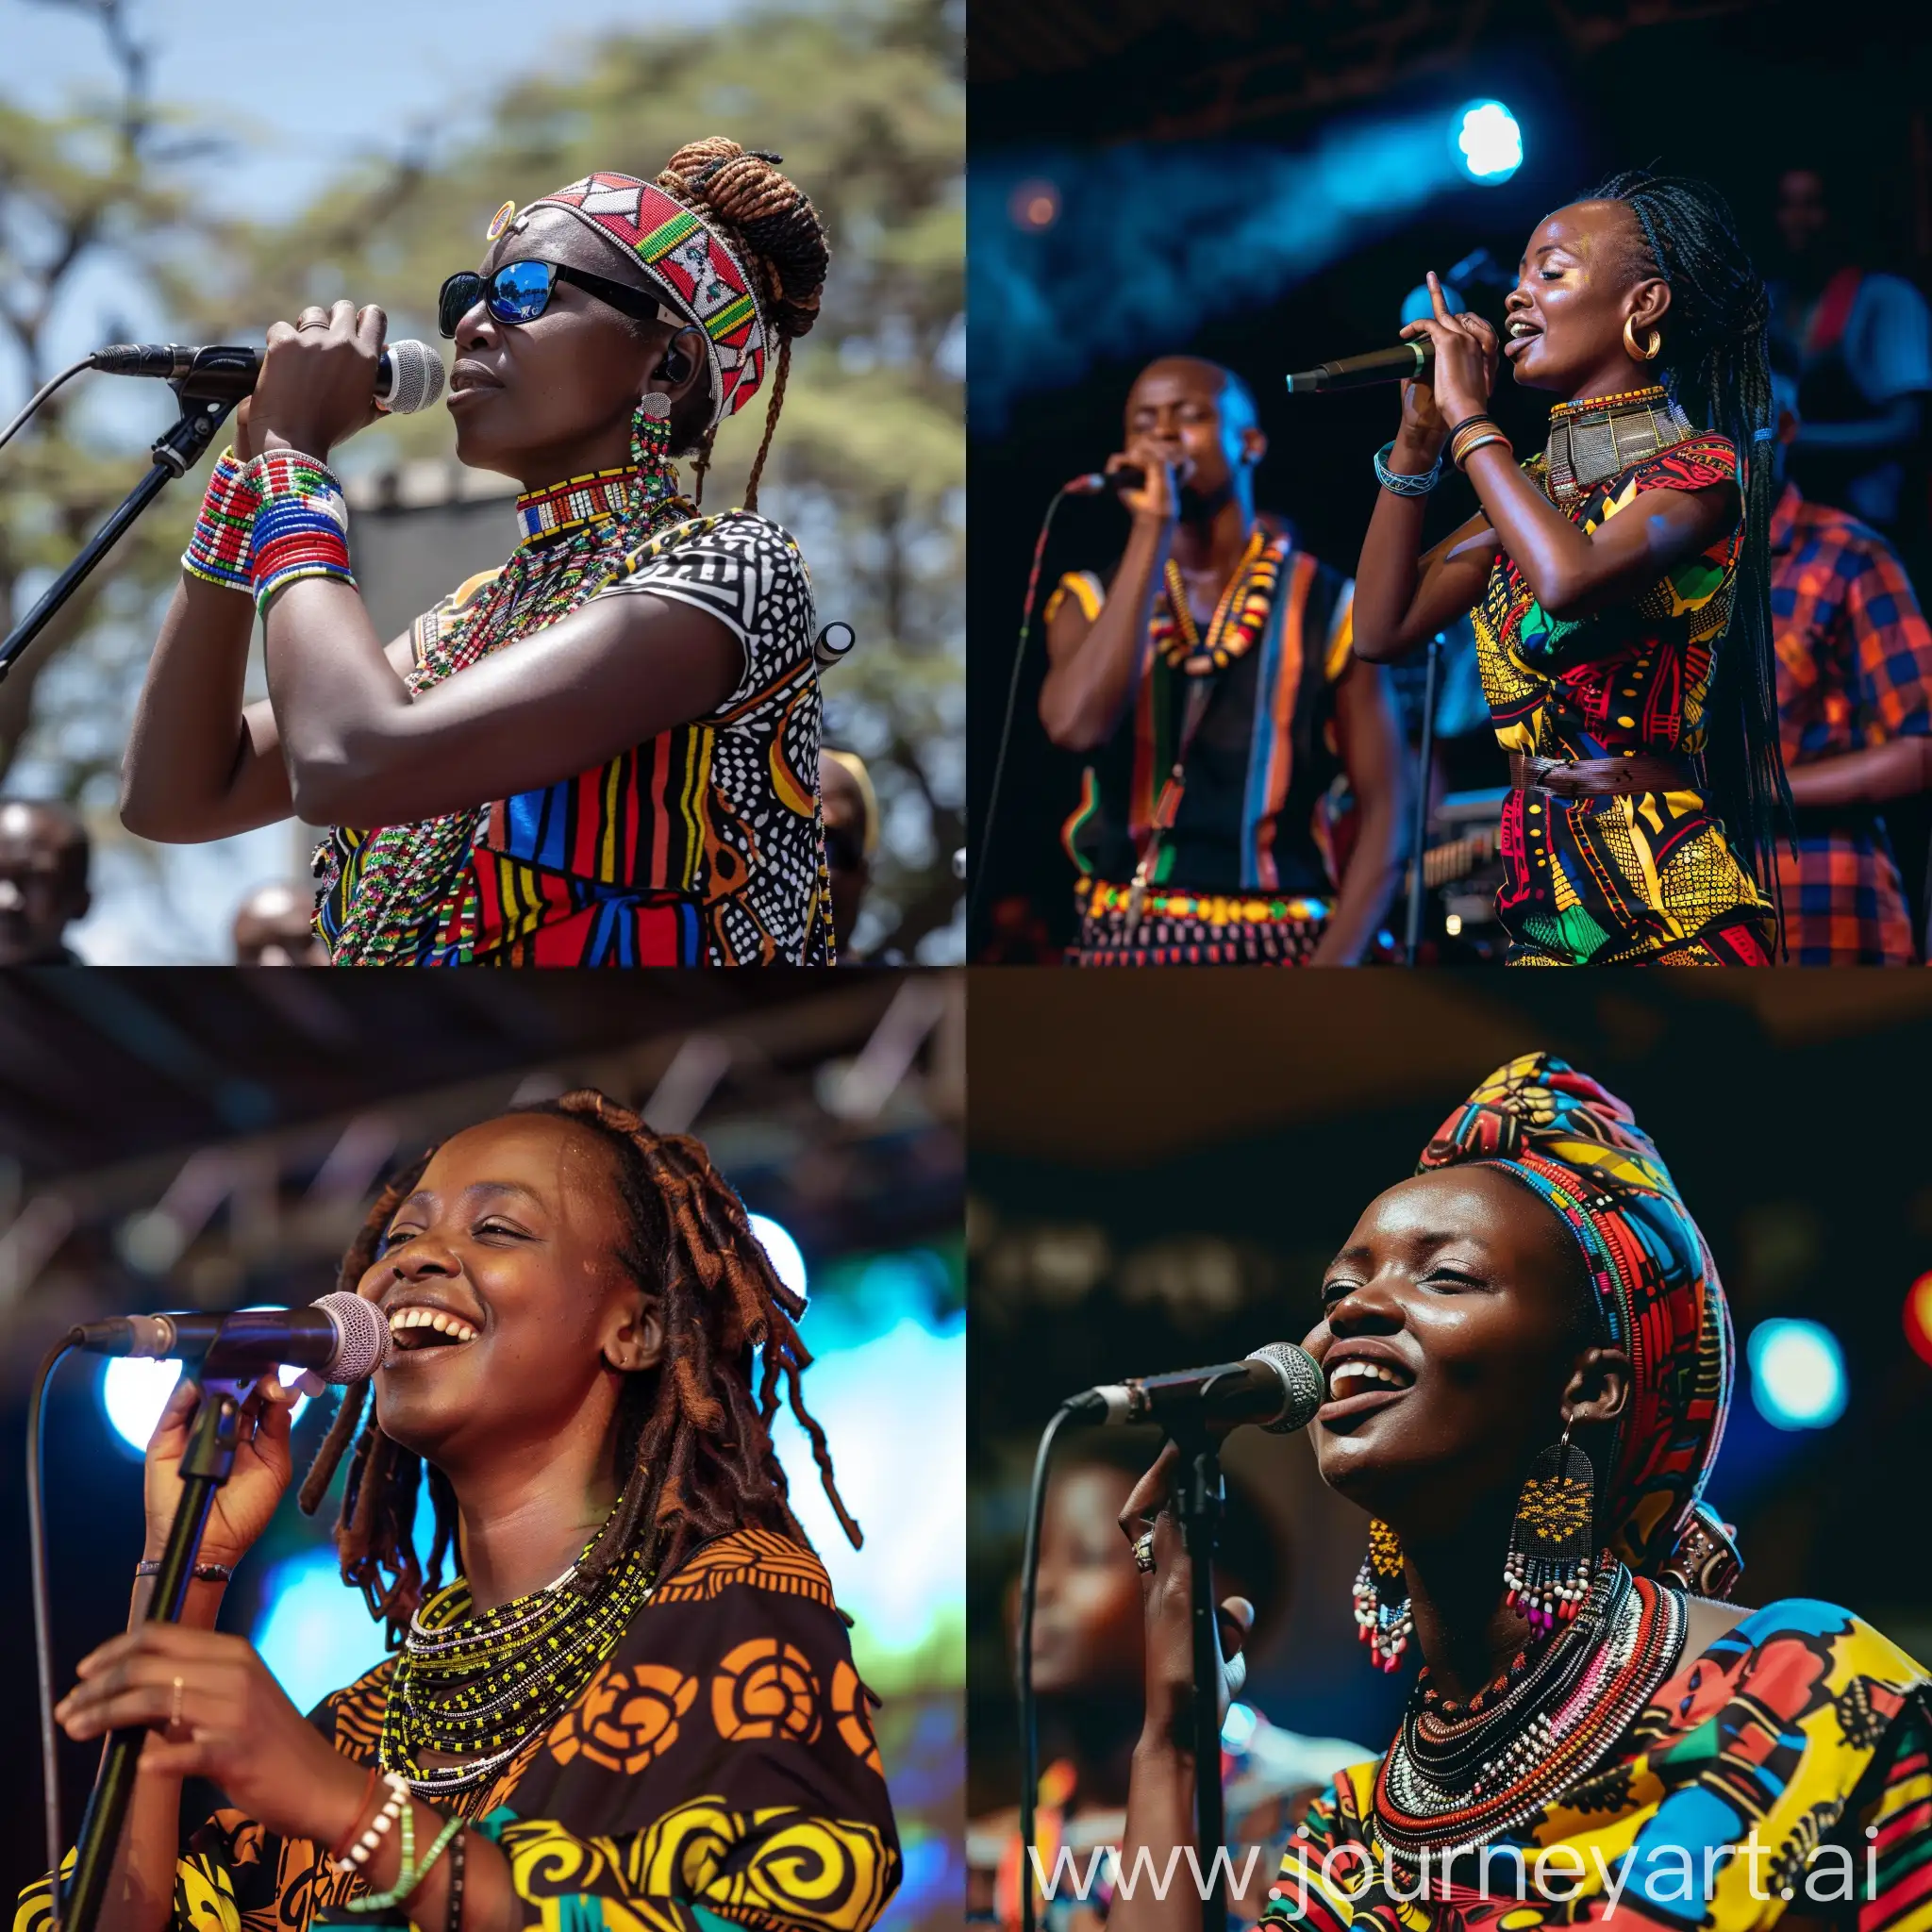 Nairobi arts and music festival